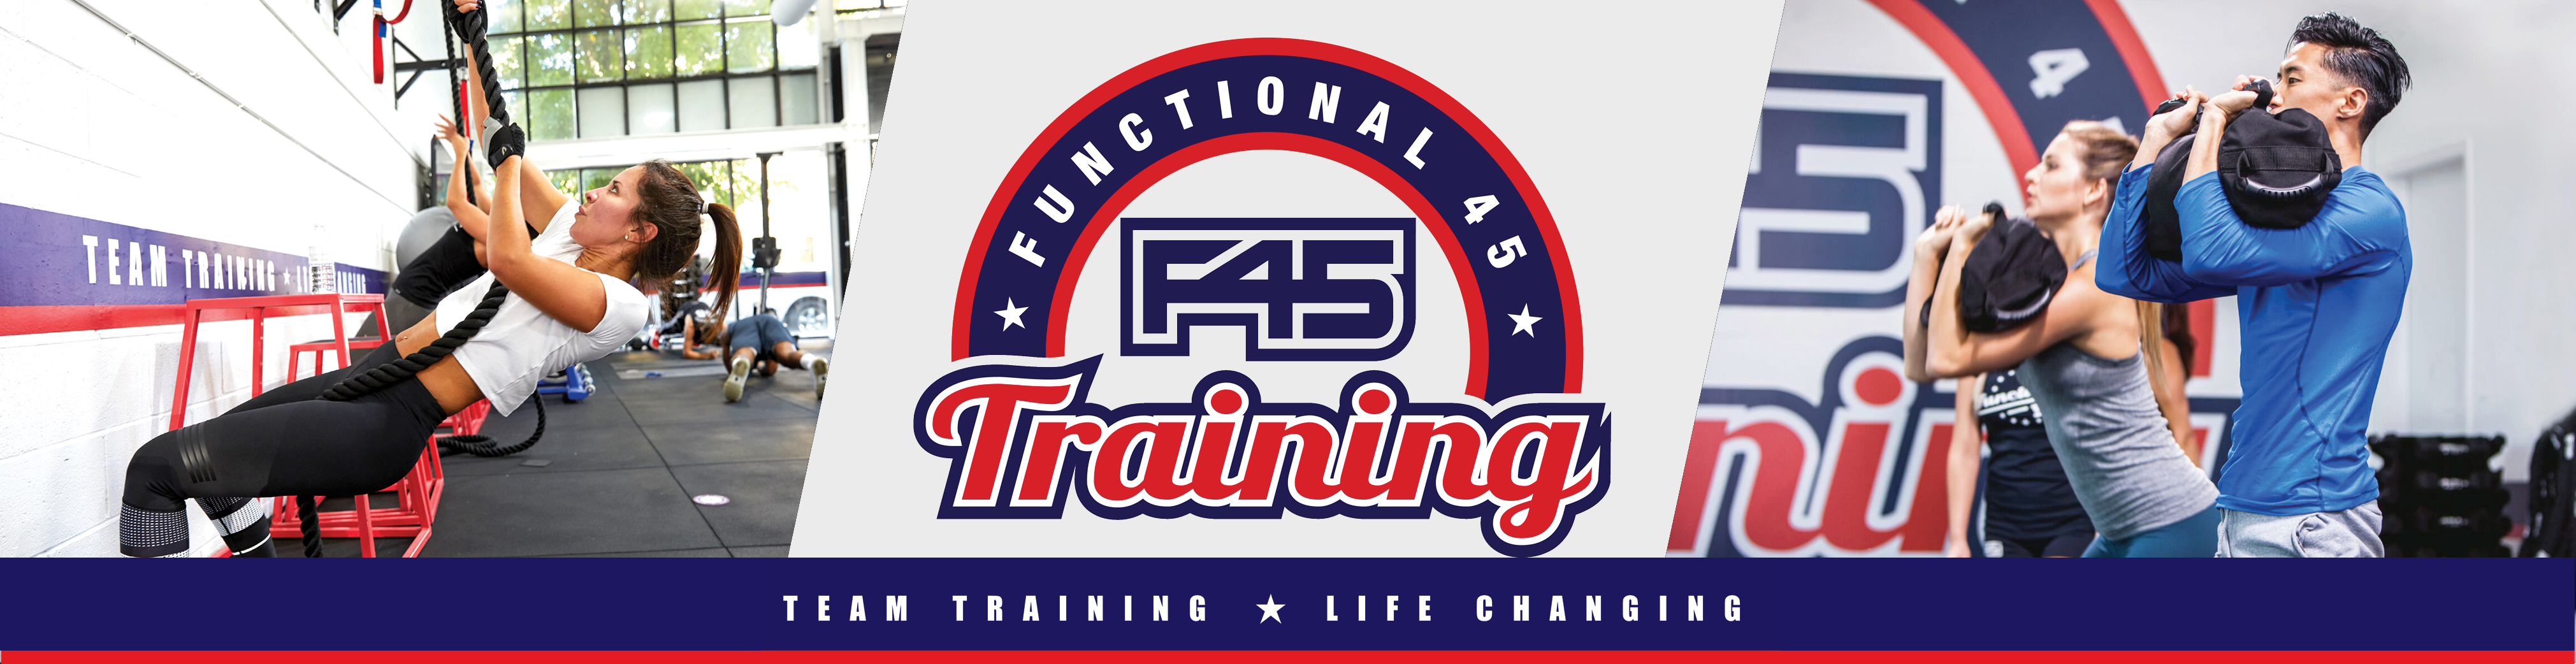 F45 Training Mylan Park - Header Image